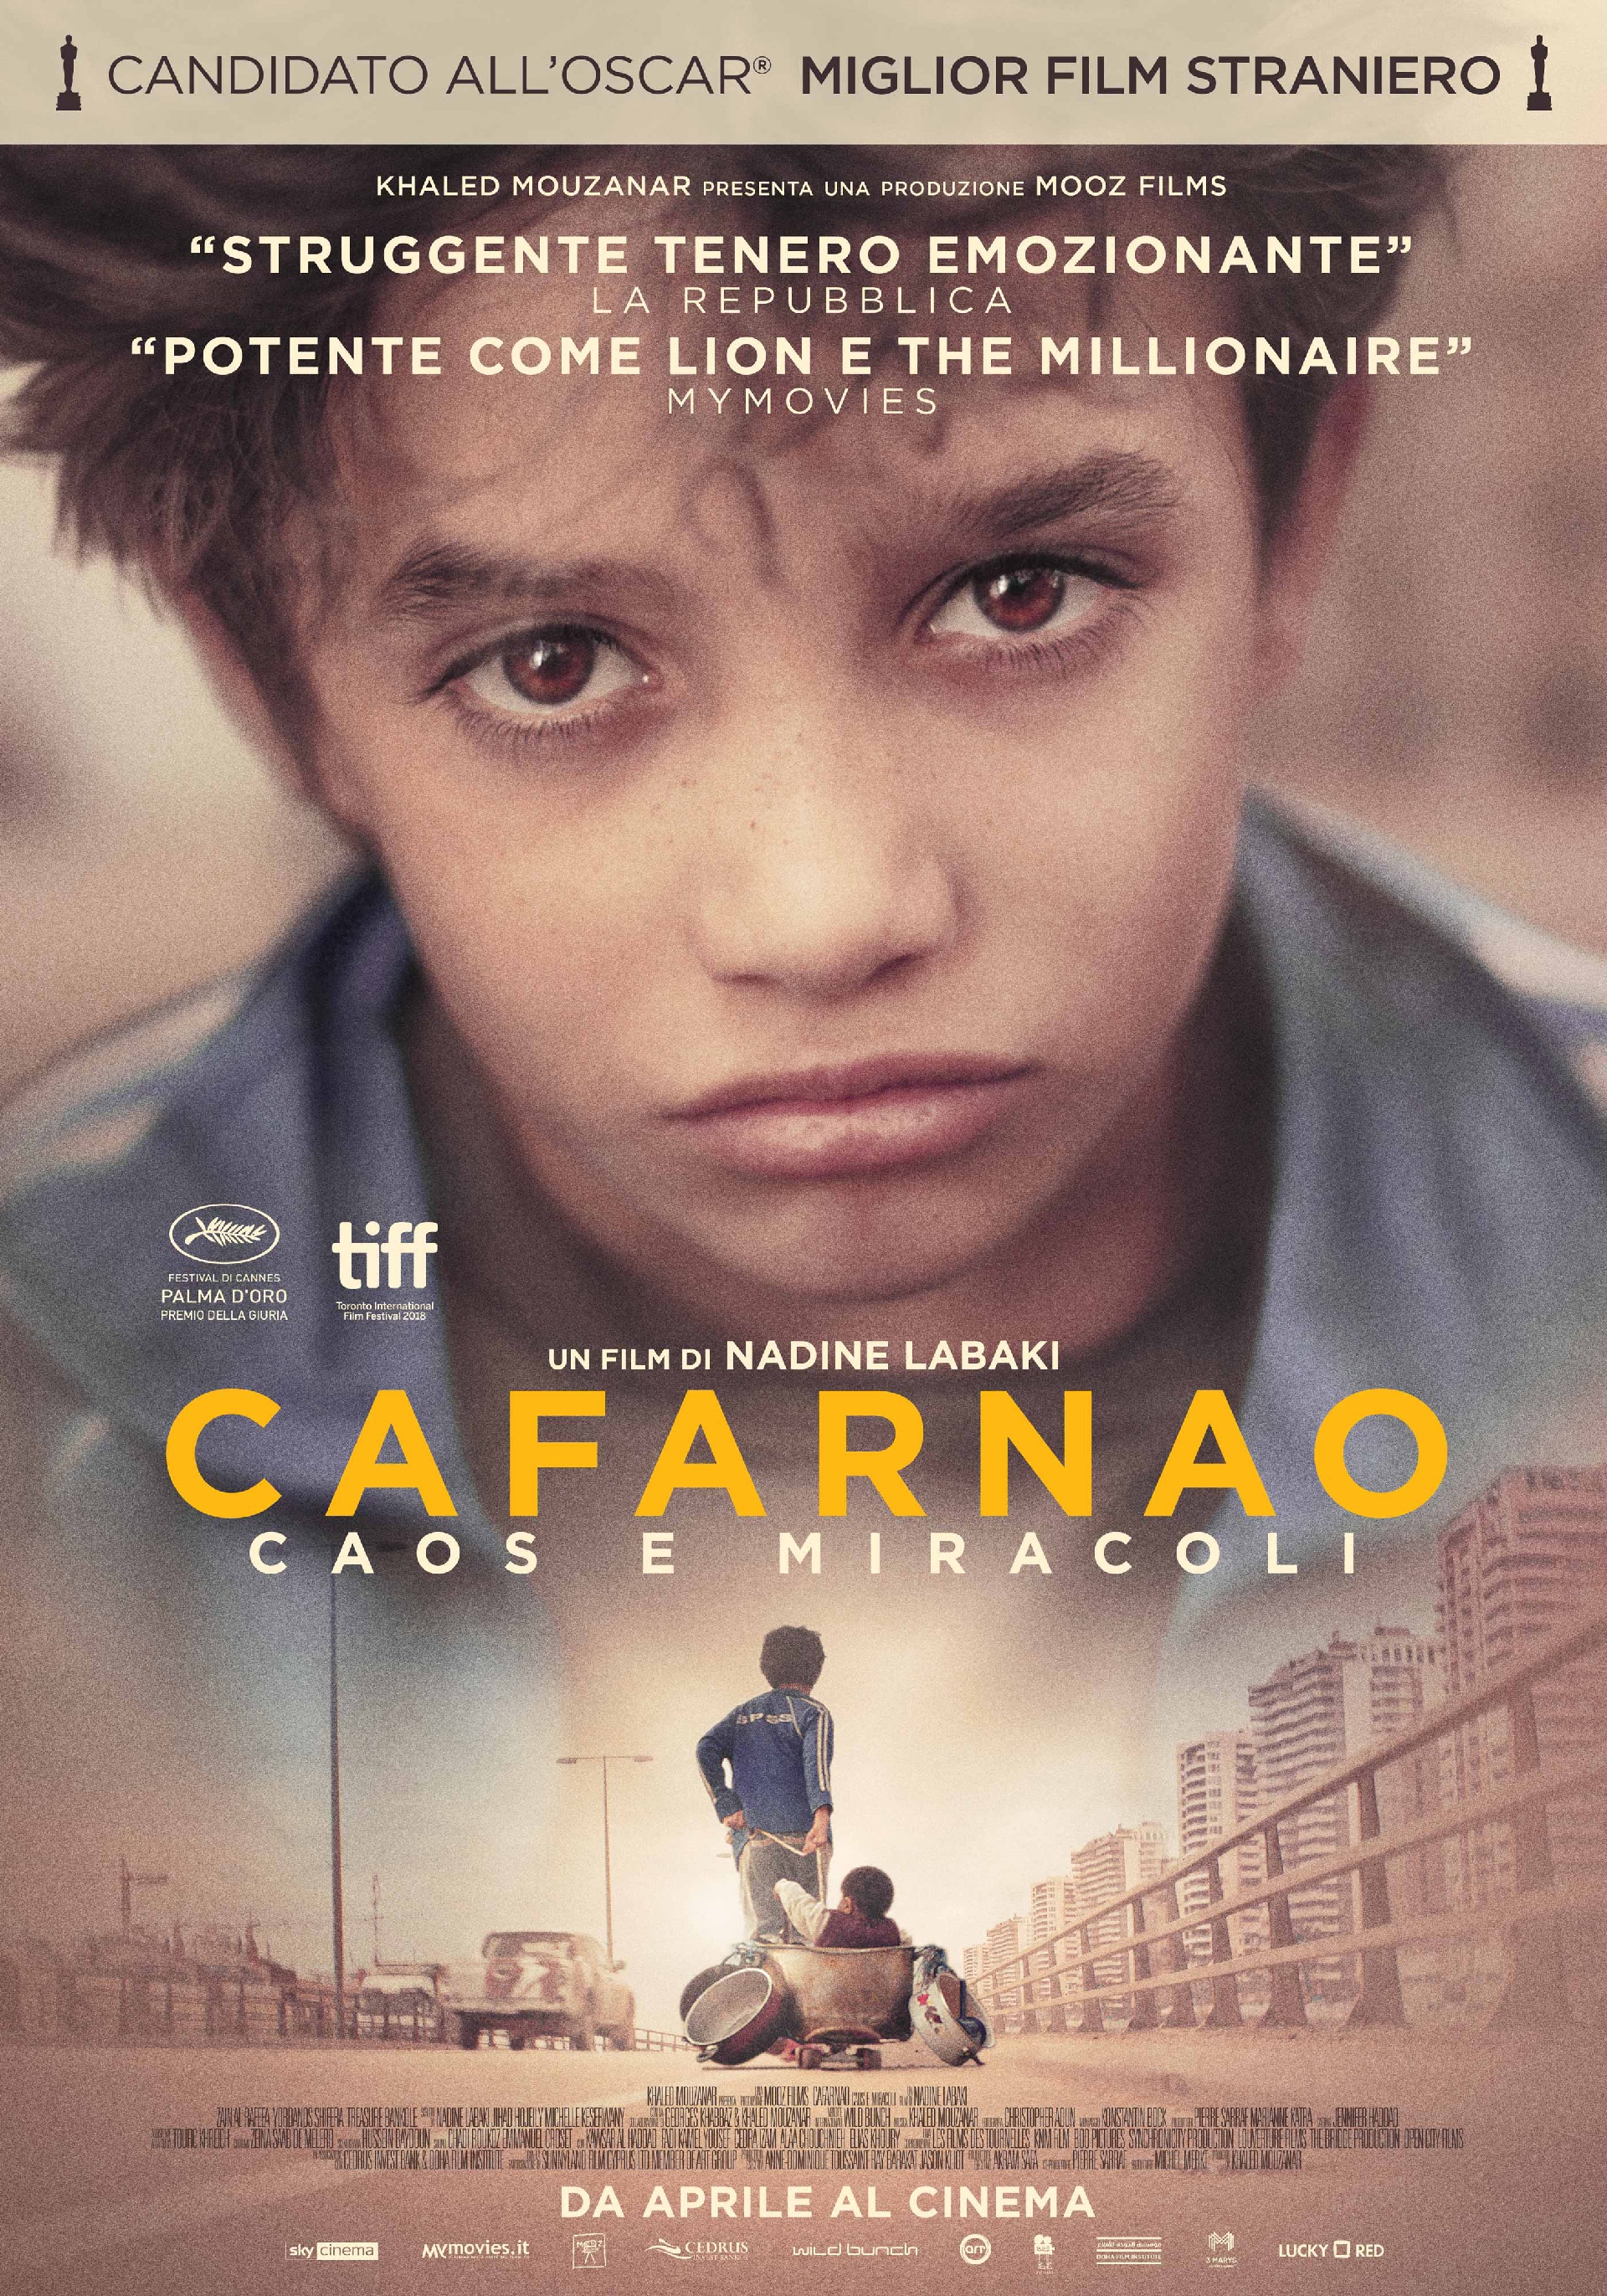 Cafarnao cinematographe.it